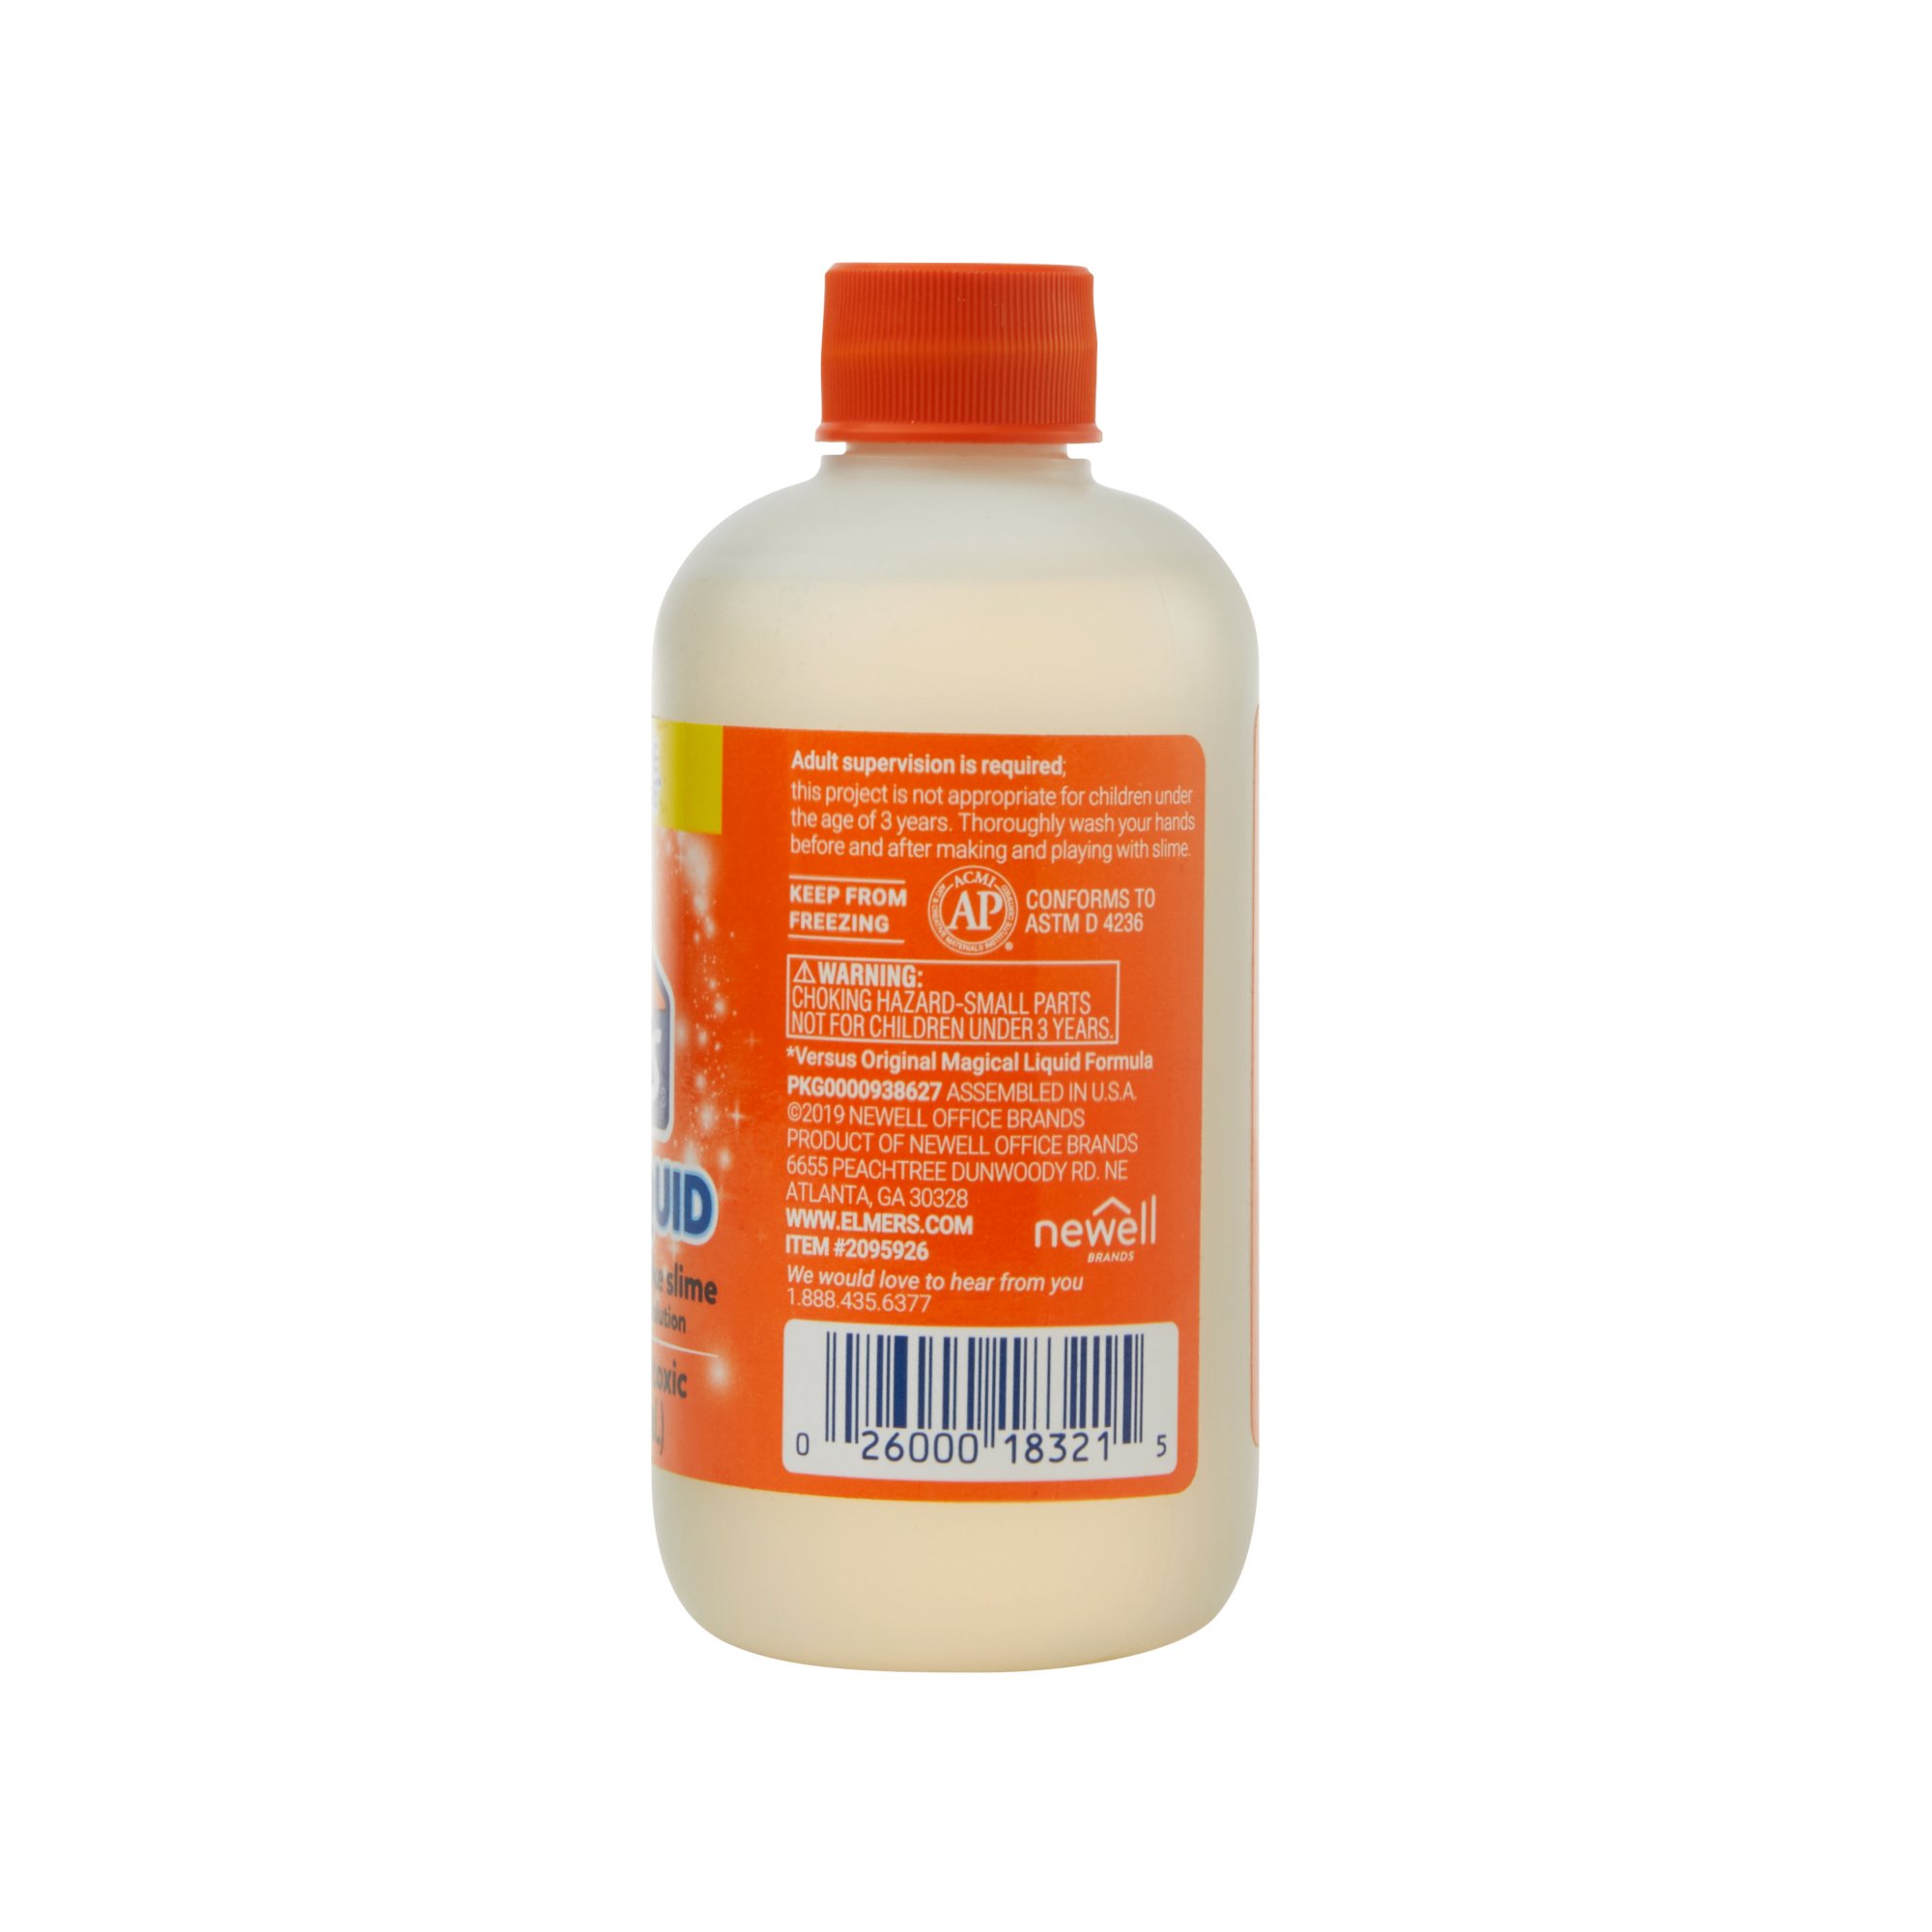 All Purpose Washable Liquid Glue, 1 Gallon Bottle Great for Making